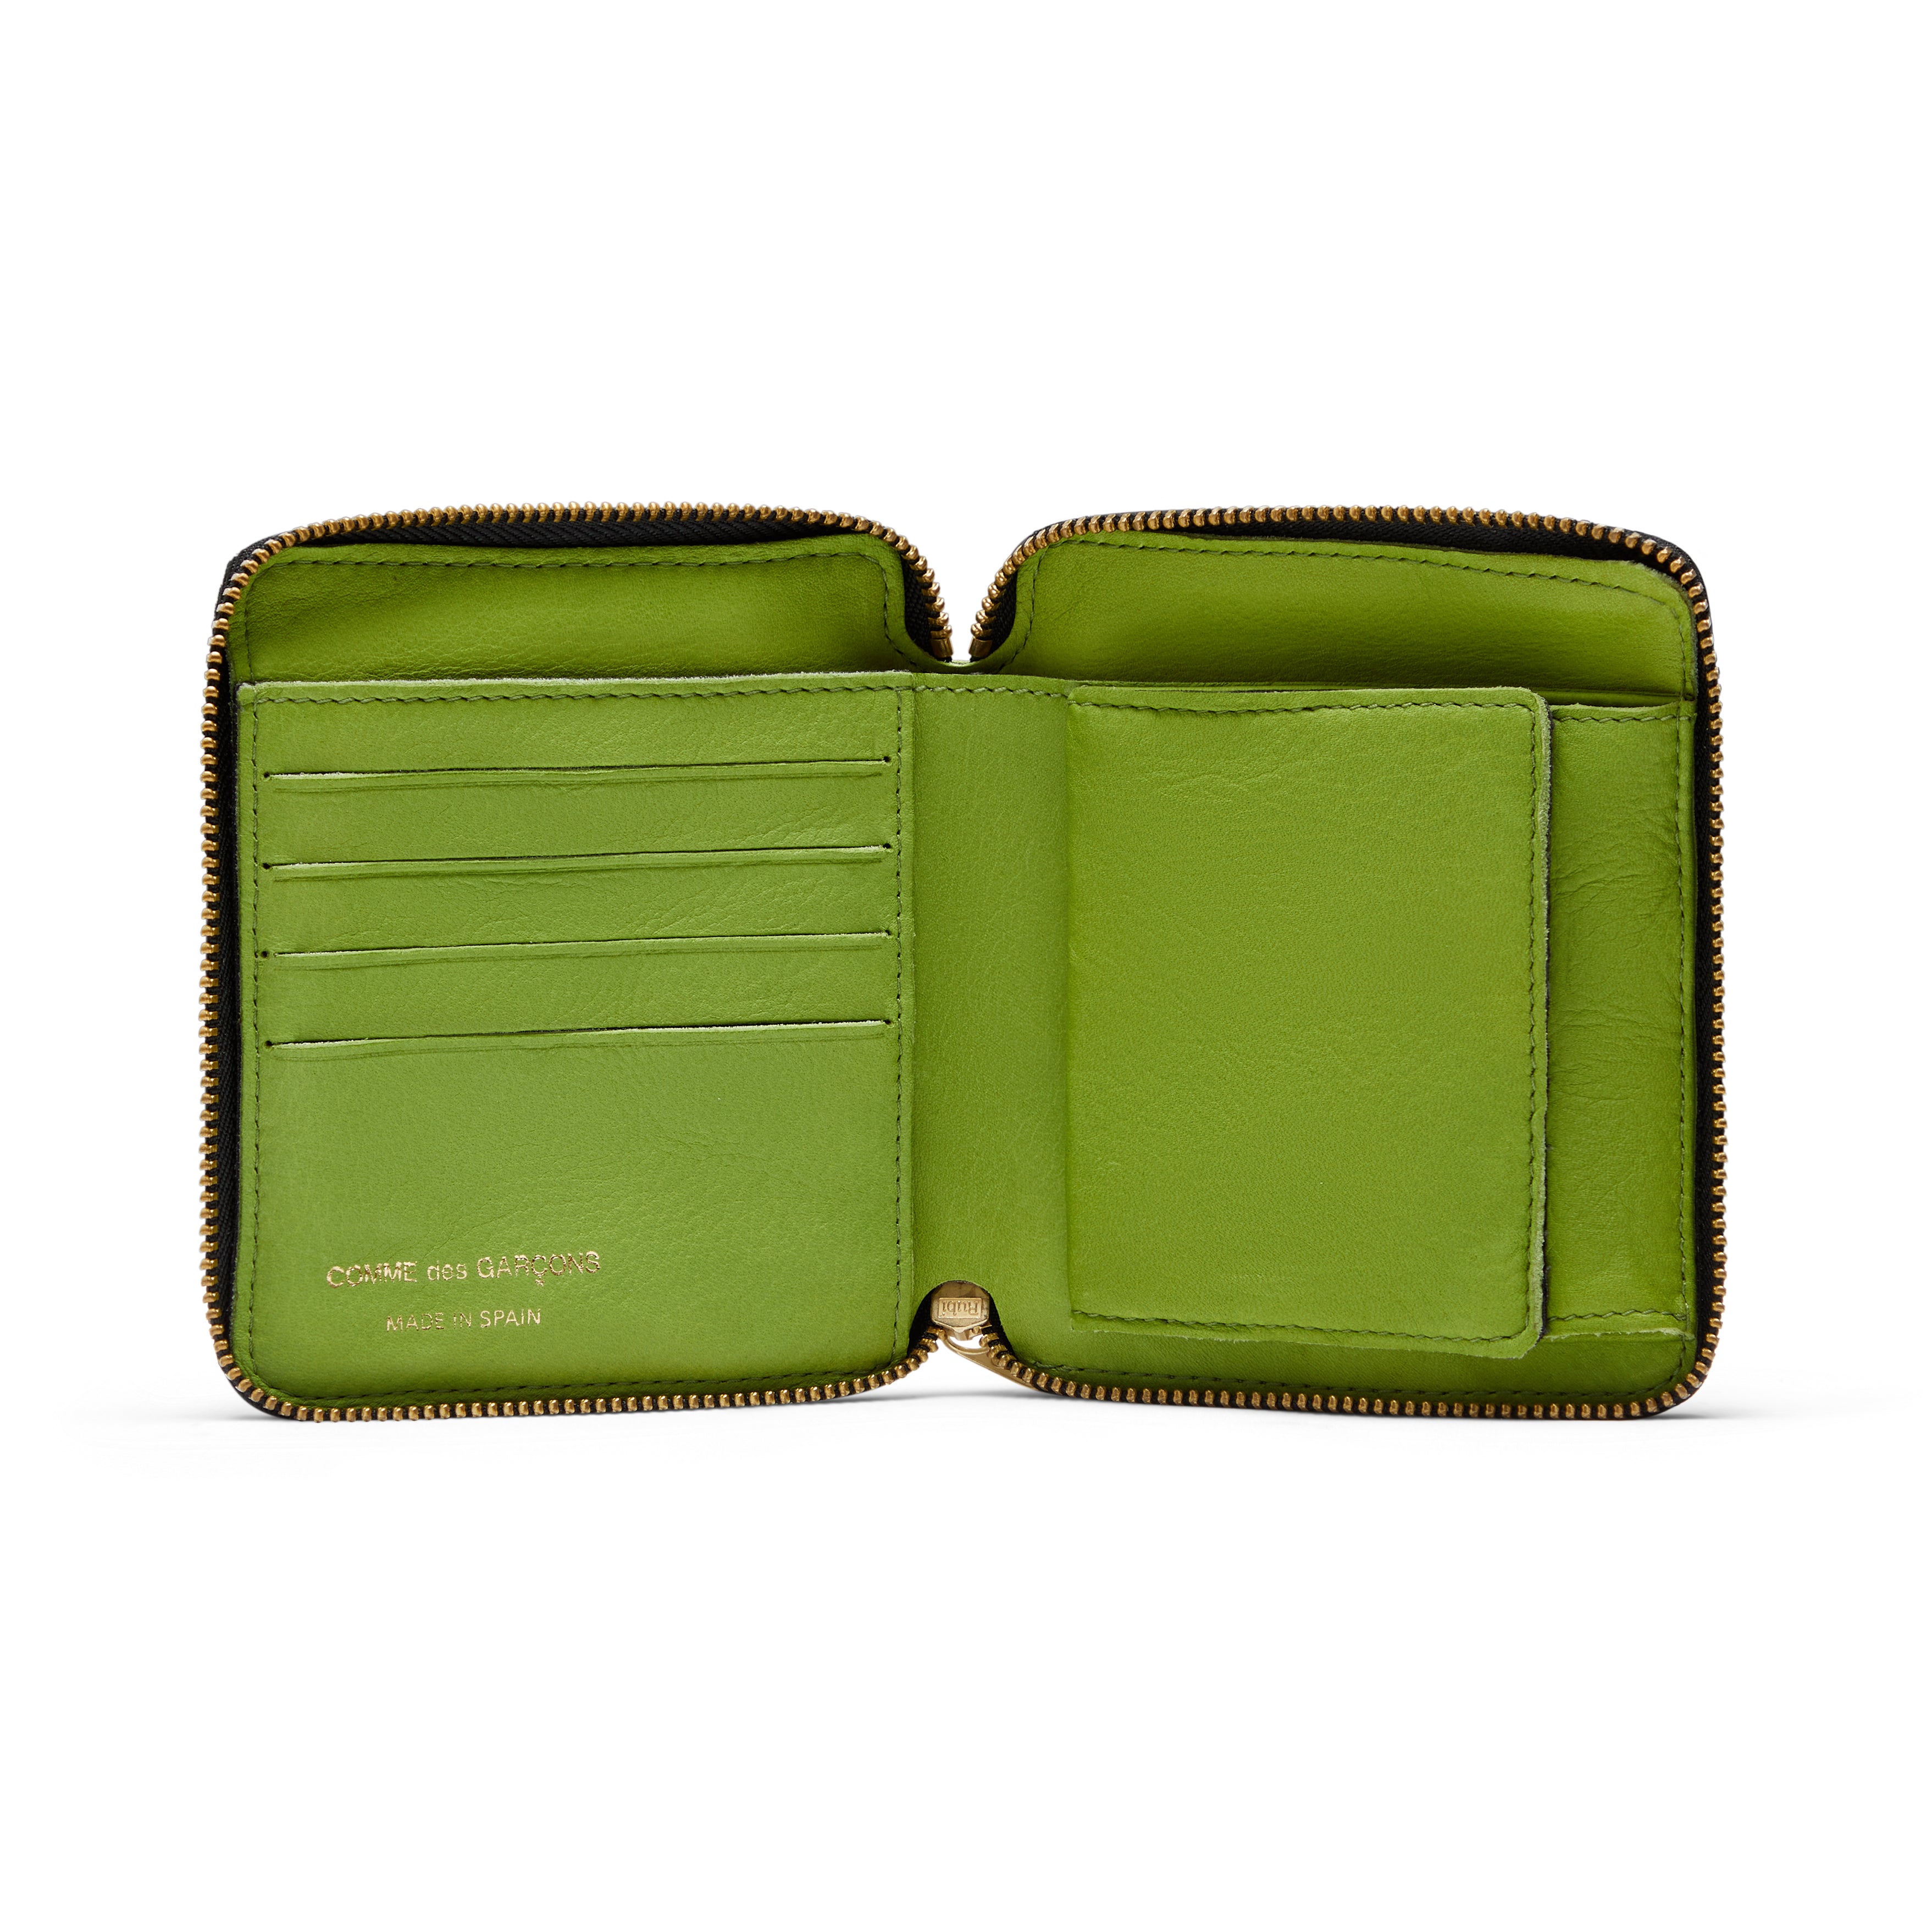 CDG Wallet - Washed Full Zip Around Wallet - (Green)